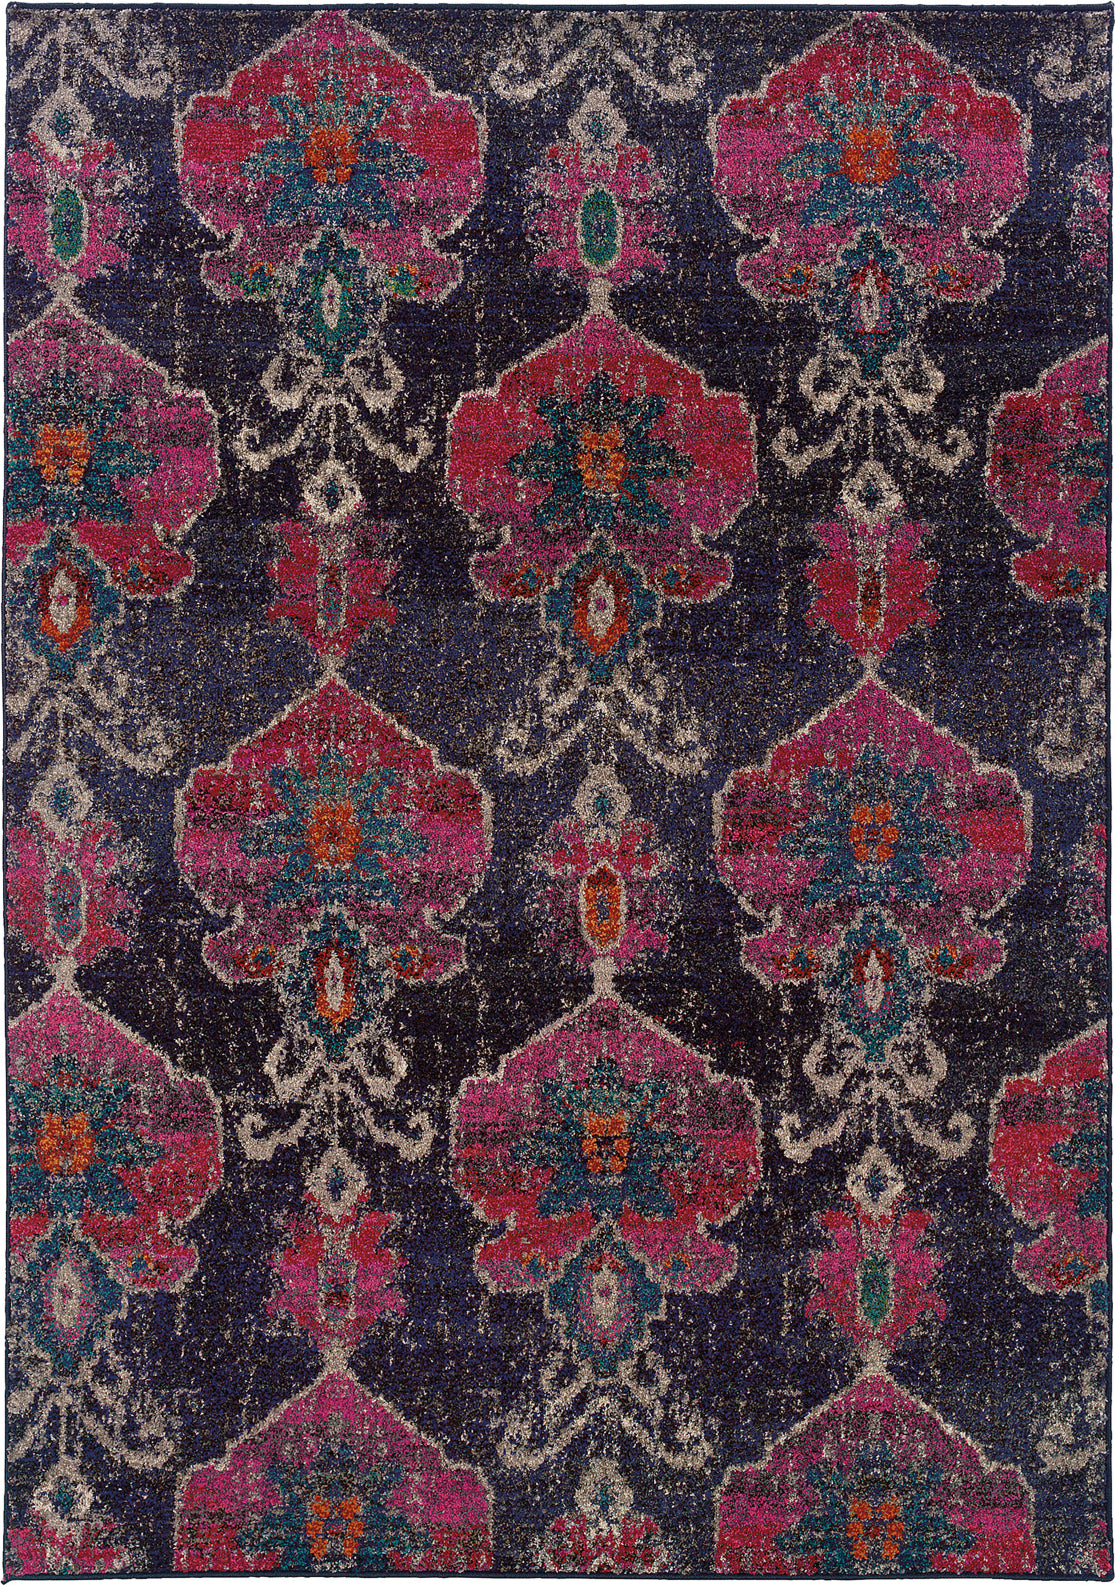 Oriental Weavers Kaleidoscope 1140V Charcoal/Pink Area Rug main image